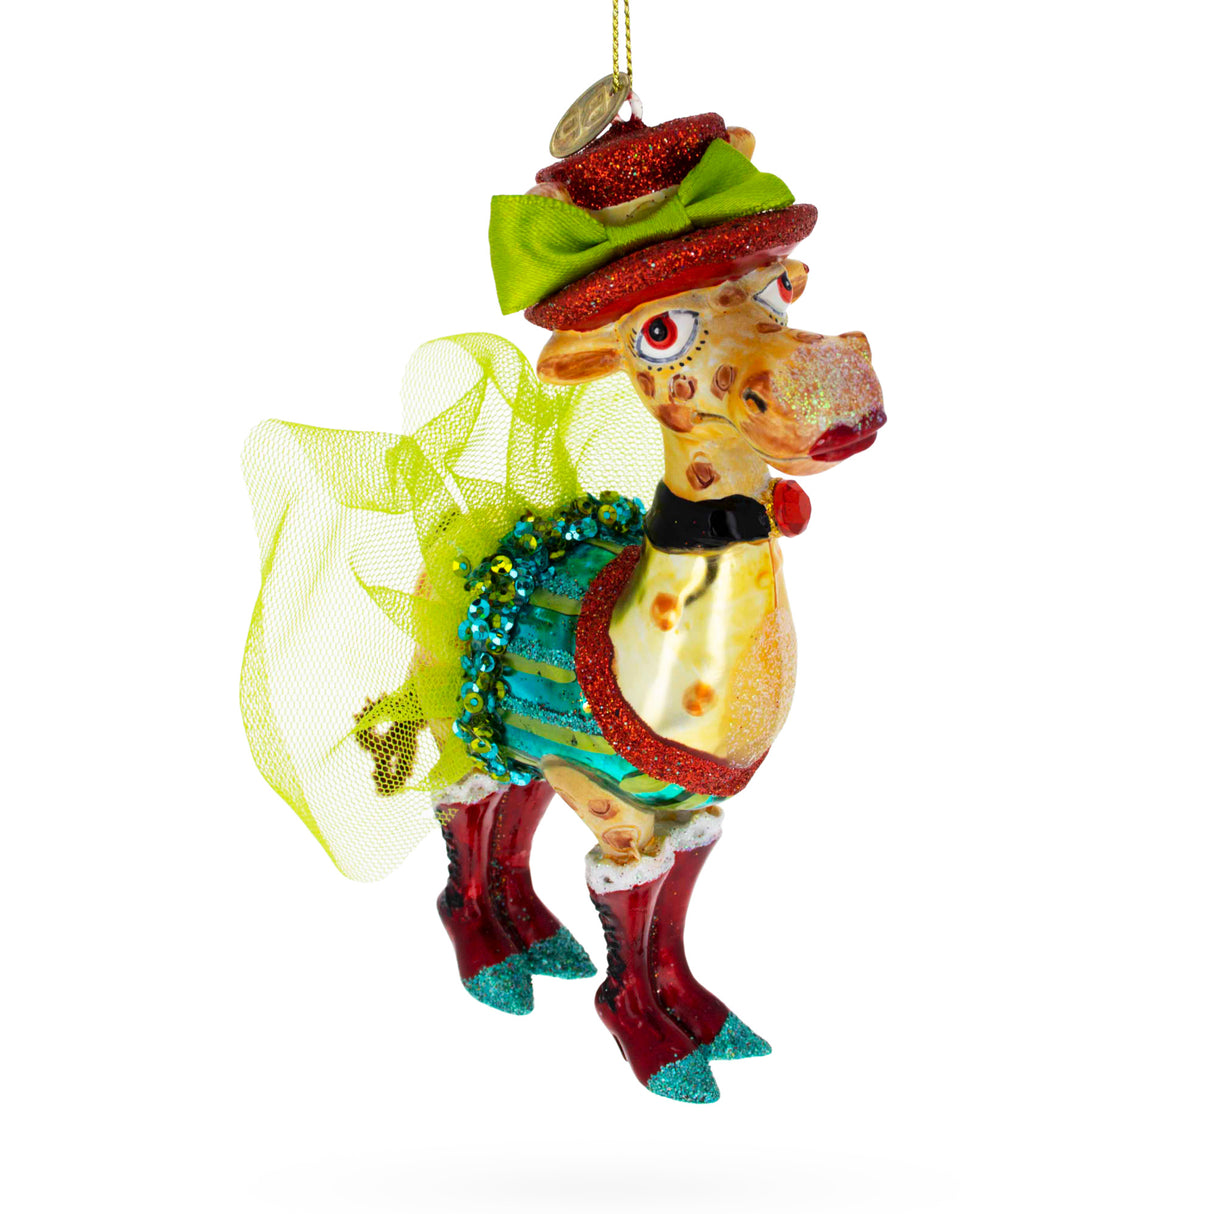 Glass Charming Giraffe in Costume - Blown Glass Christmas Ornament in Multi color